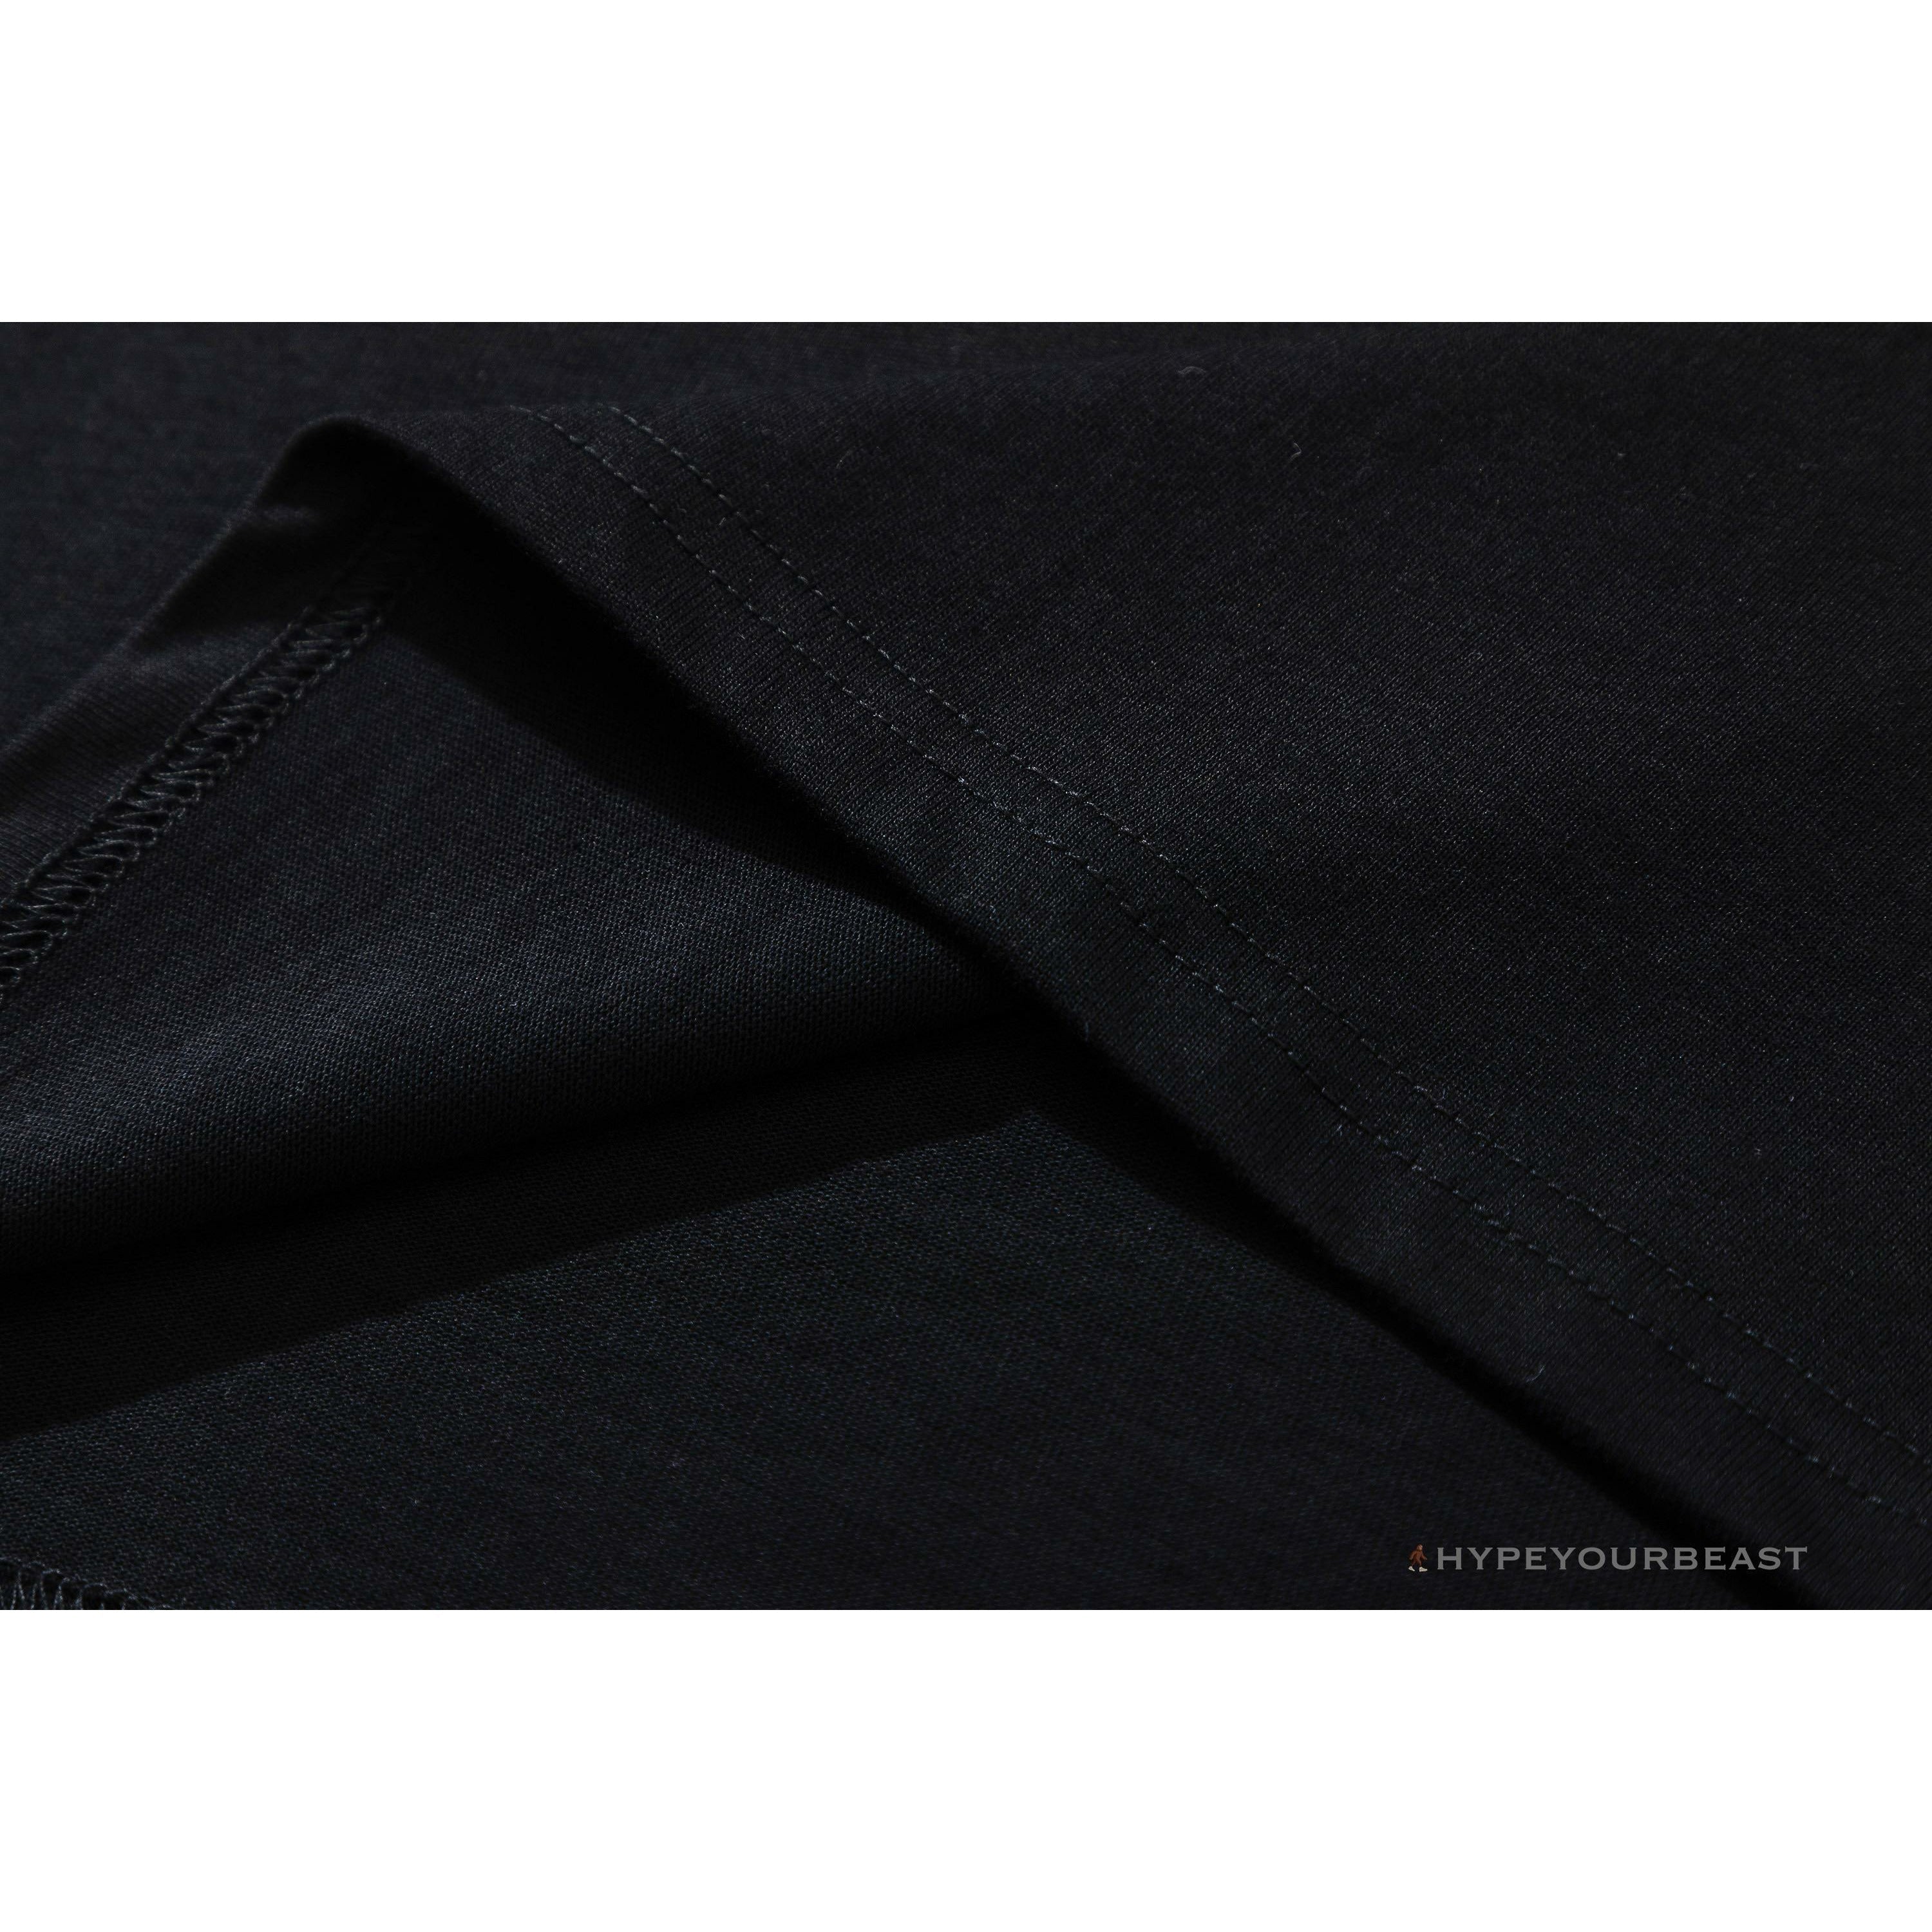 OFF-WHITE Mechanical Style 'BLACK' Tee Shirt